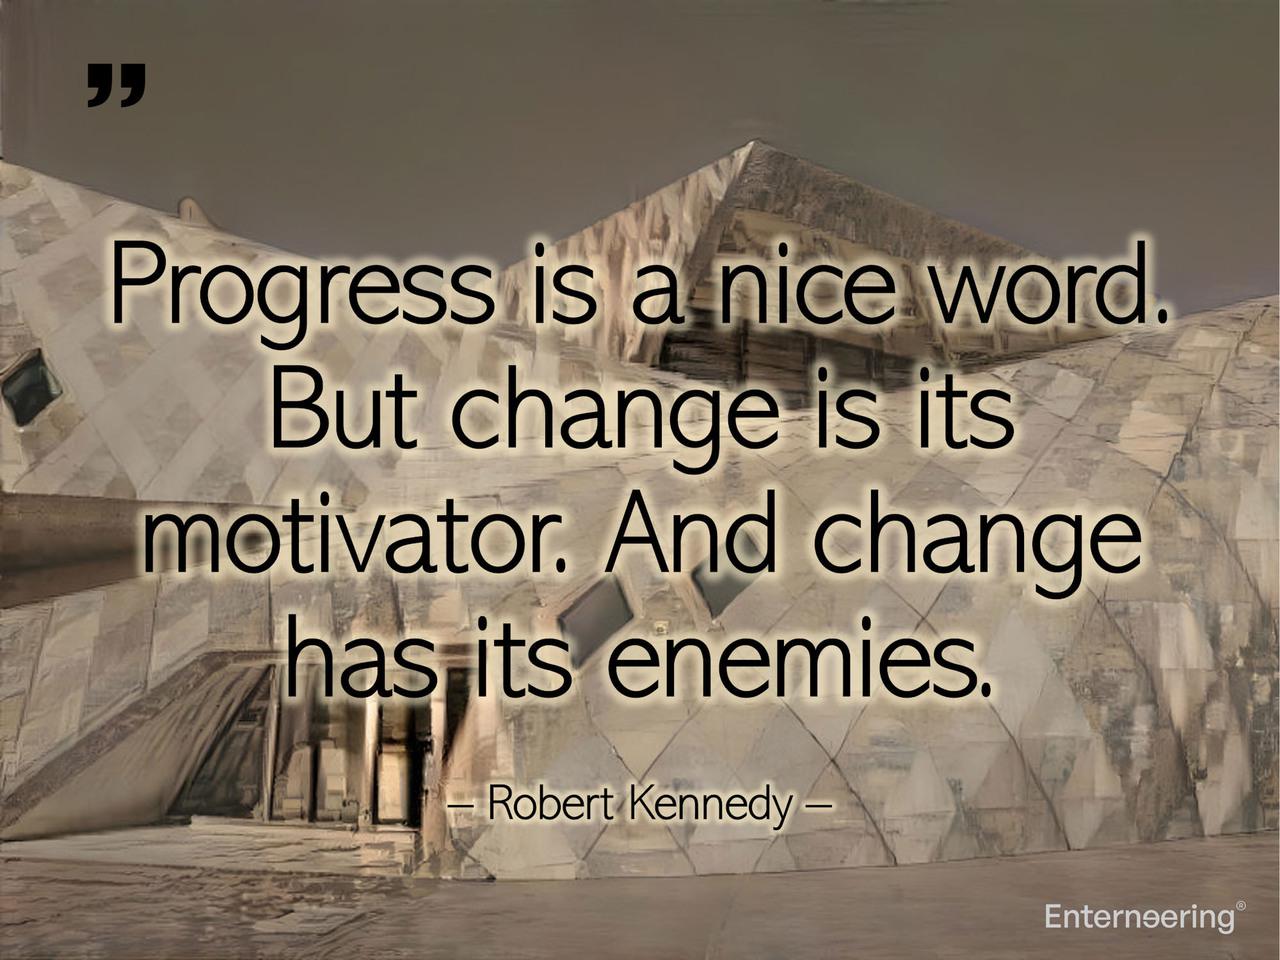 Change has its enemies